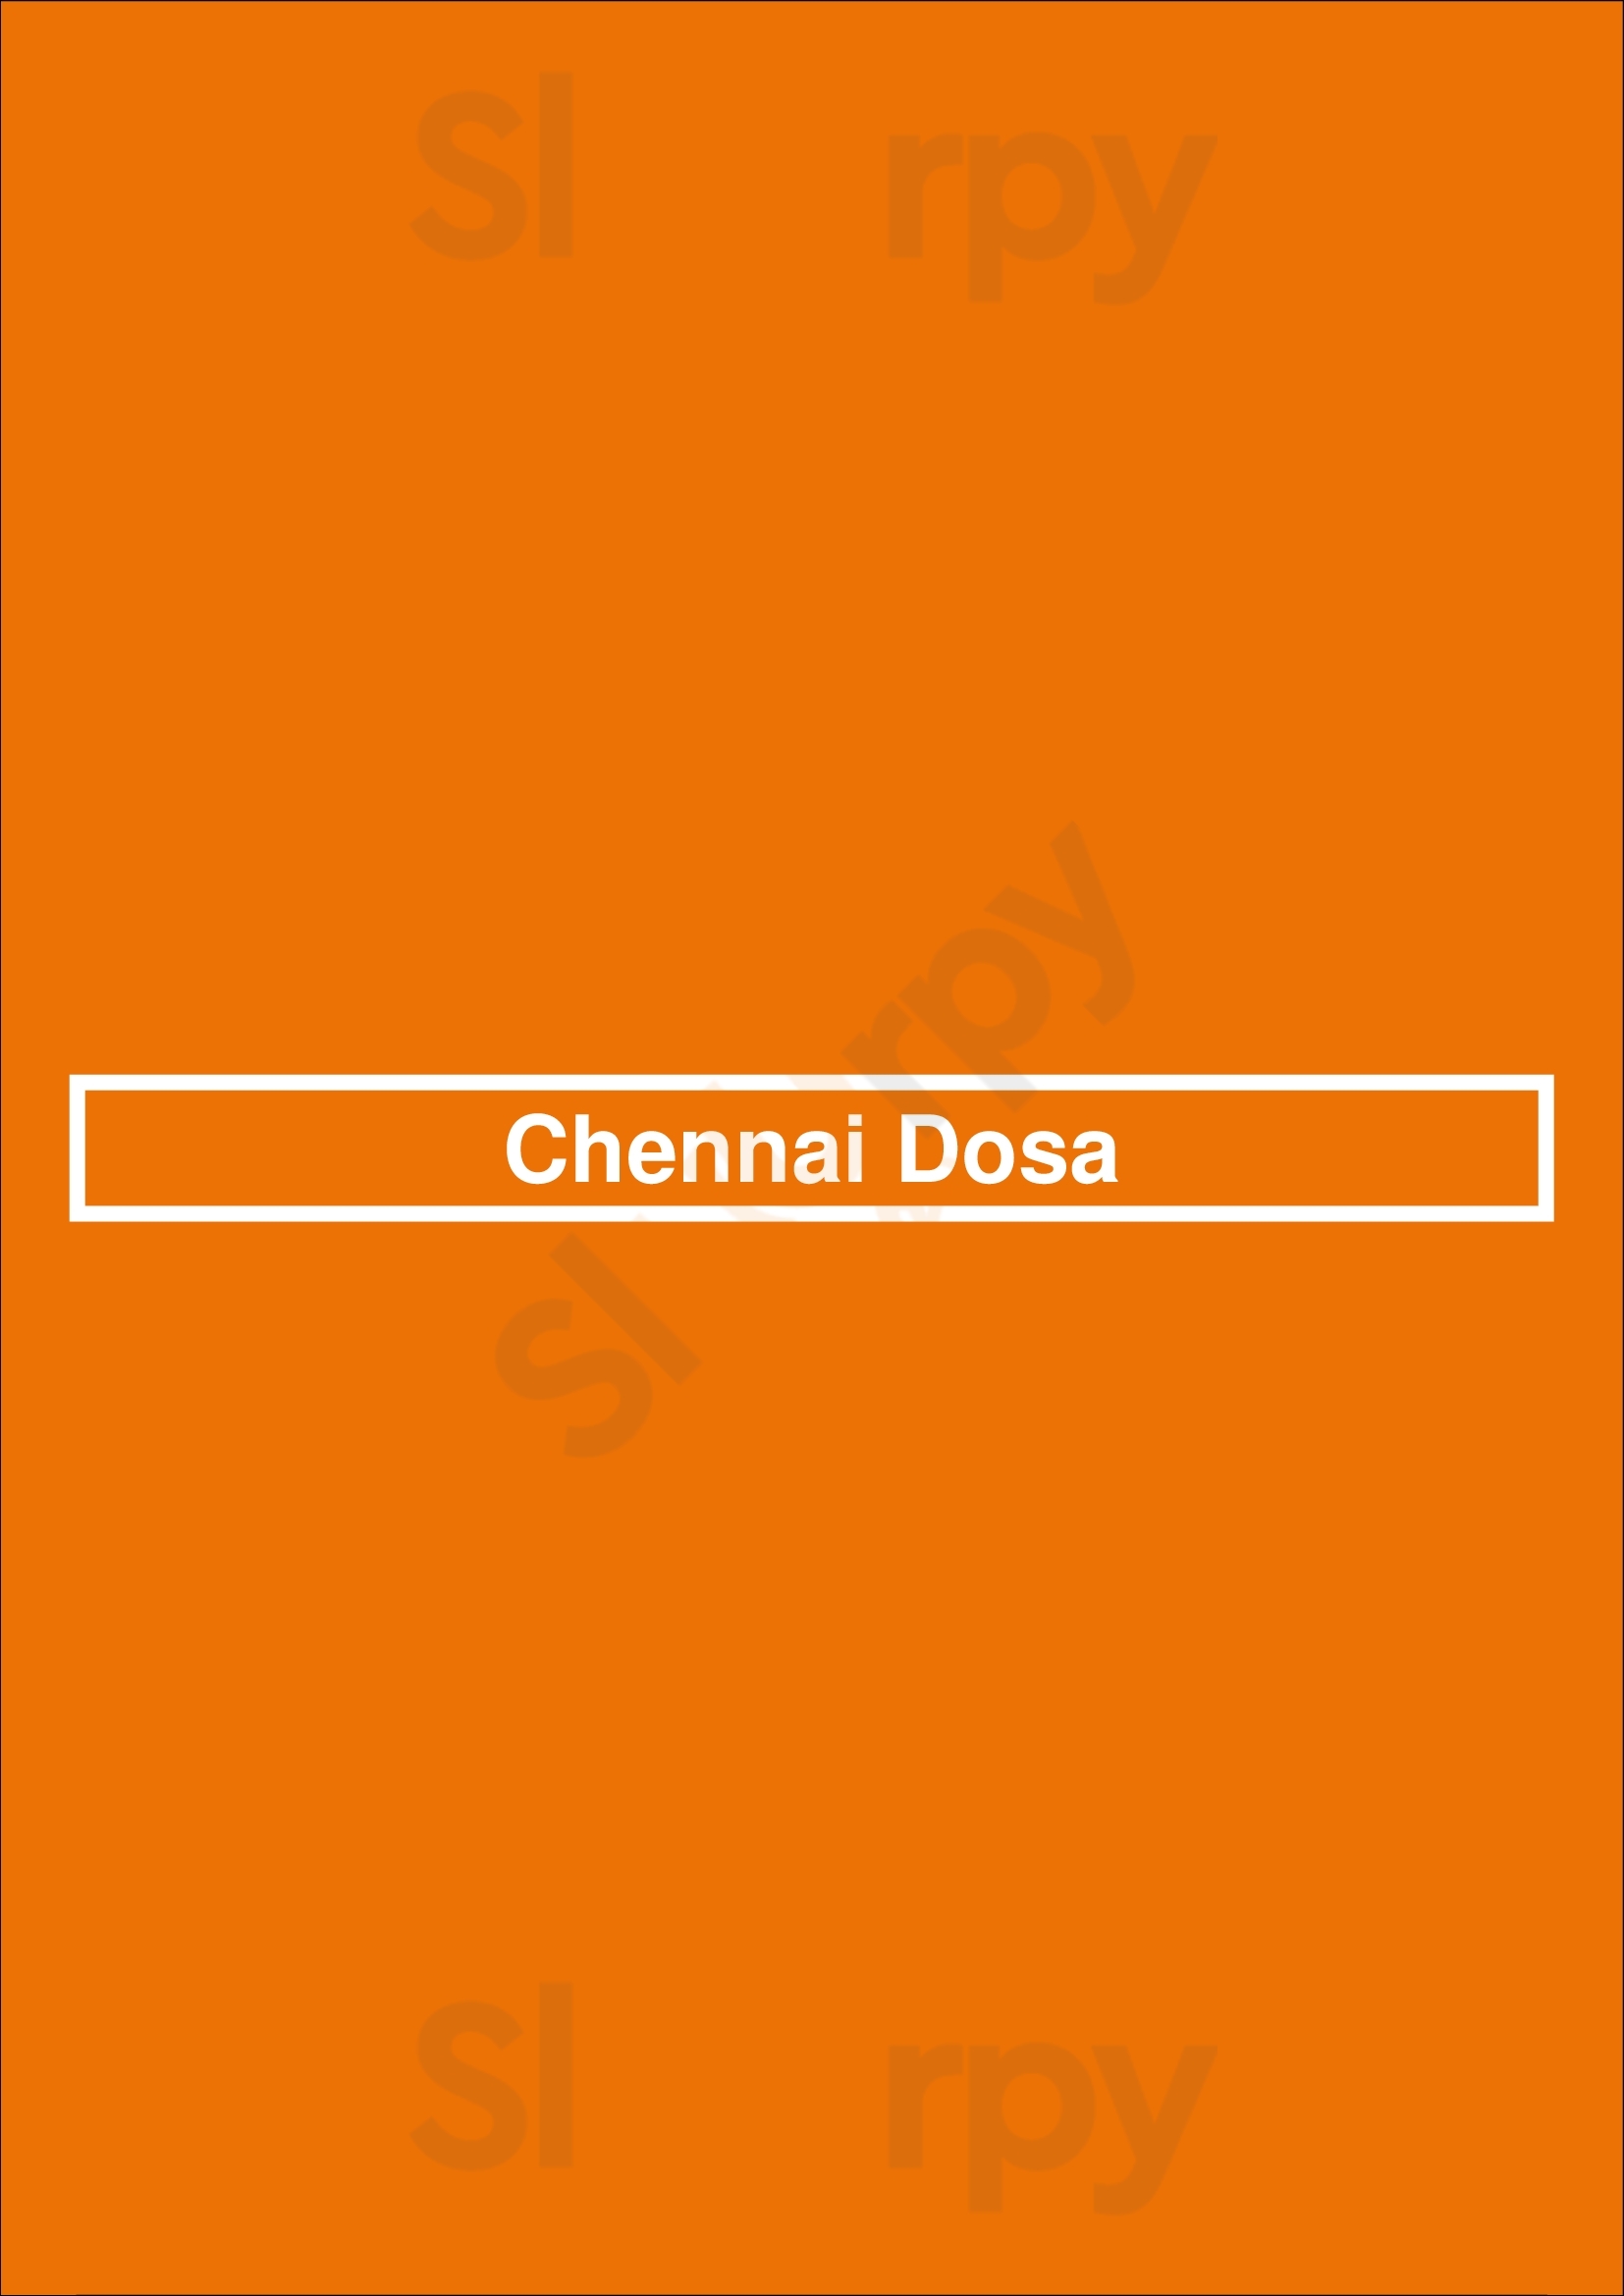 Chennai Dosa Paris Menu - 1